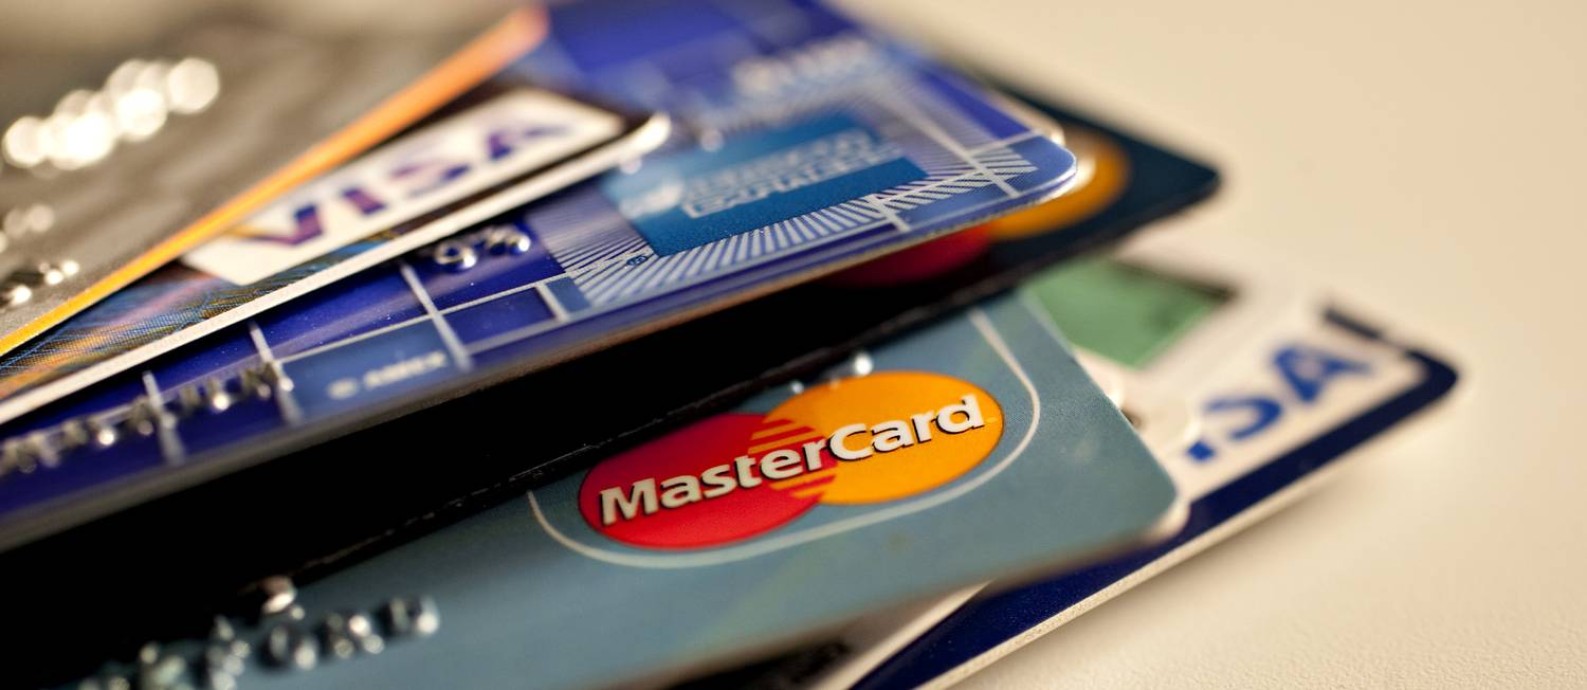 Falta de chips atrasa emissão de cartões de banco Foto: Daniel Acker / Bloomberg News